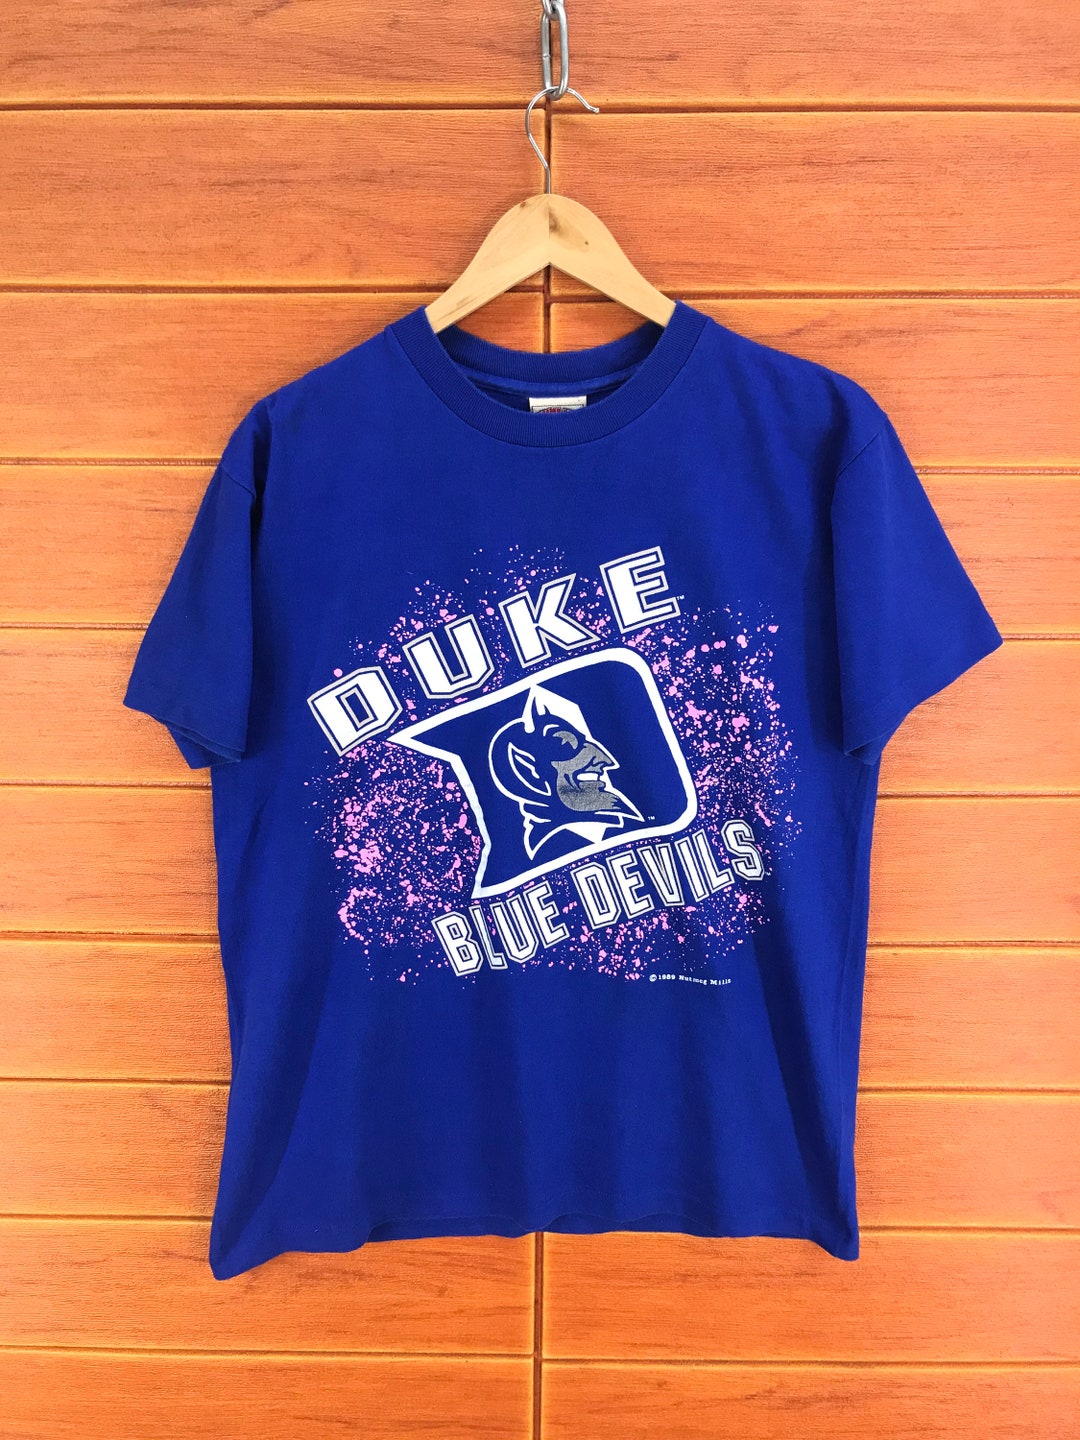 Rare Vintage Adidas Duke University Blue Devils Soccer Jersey Size